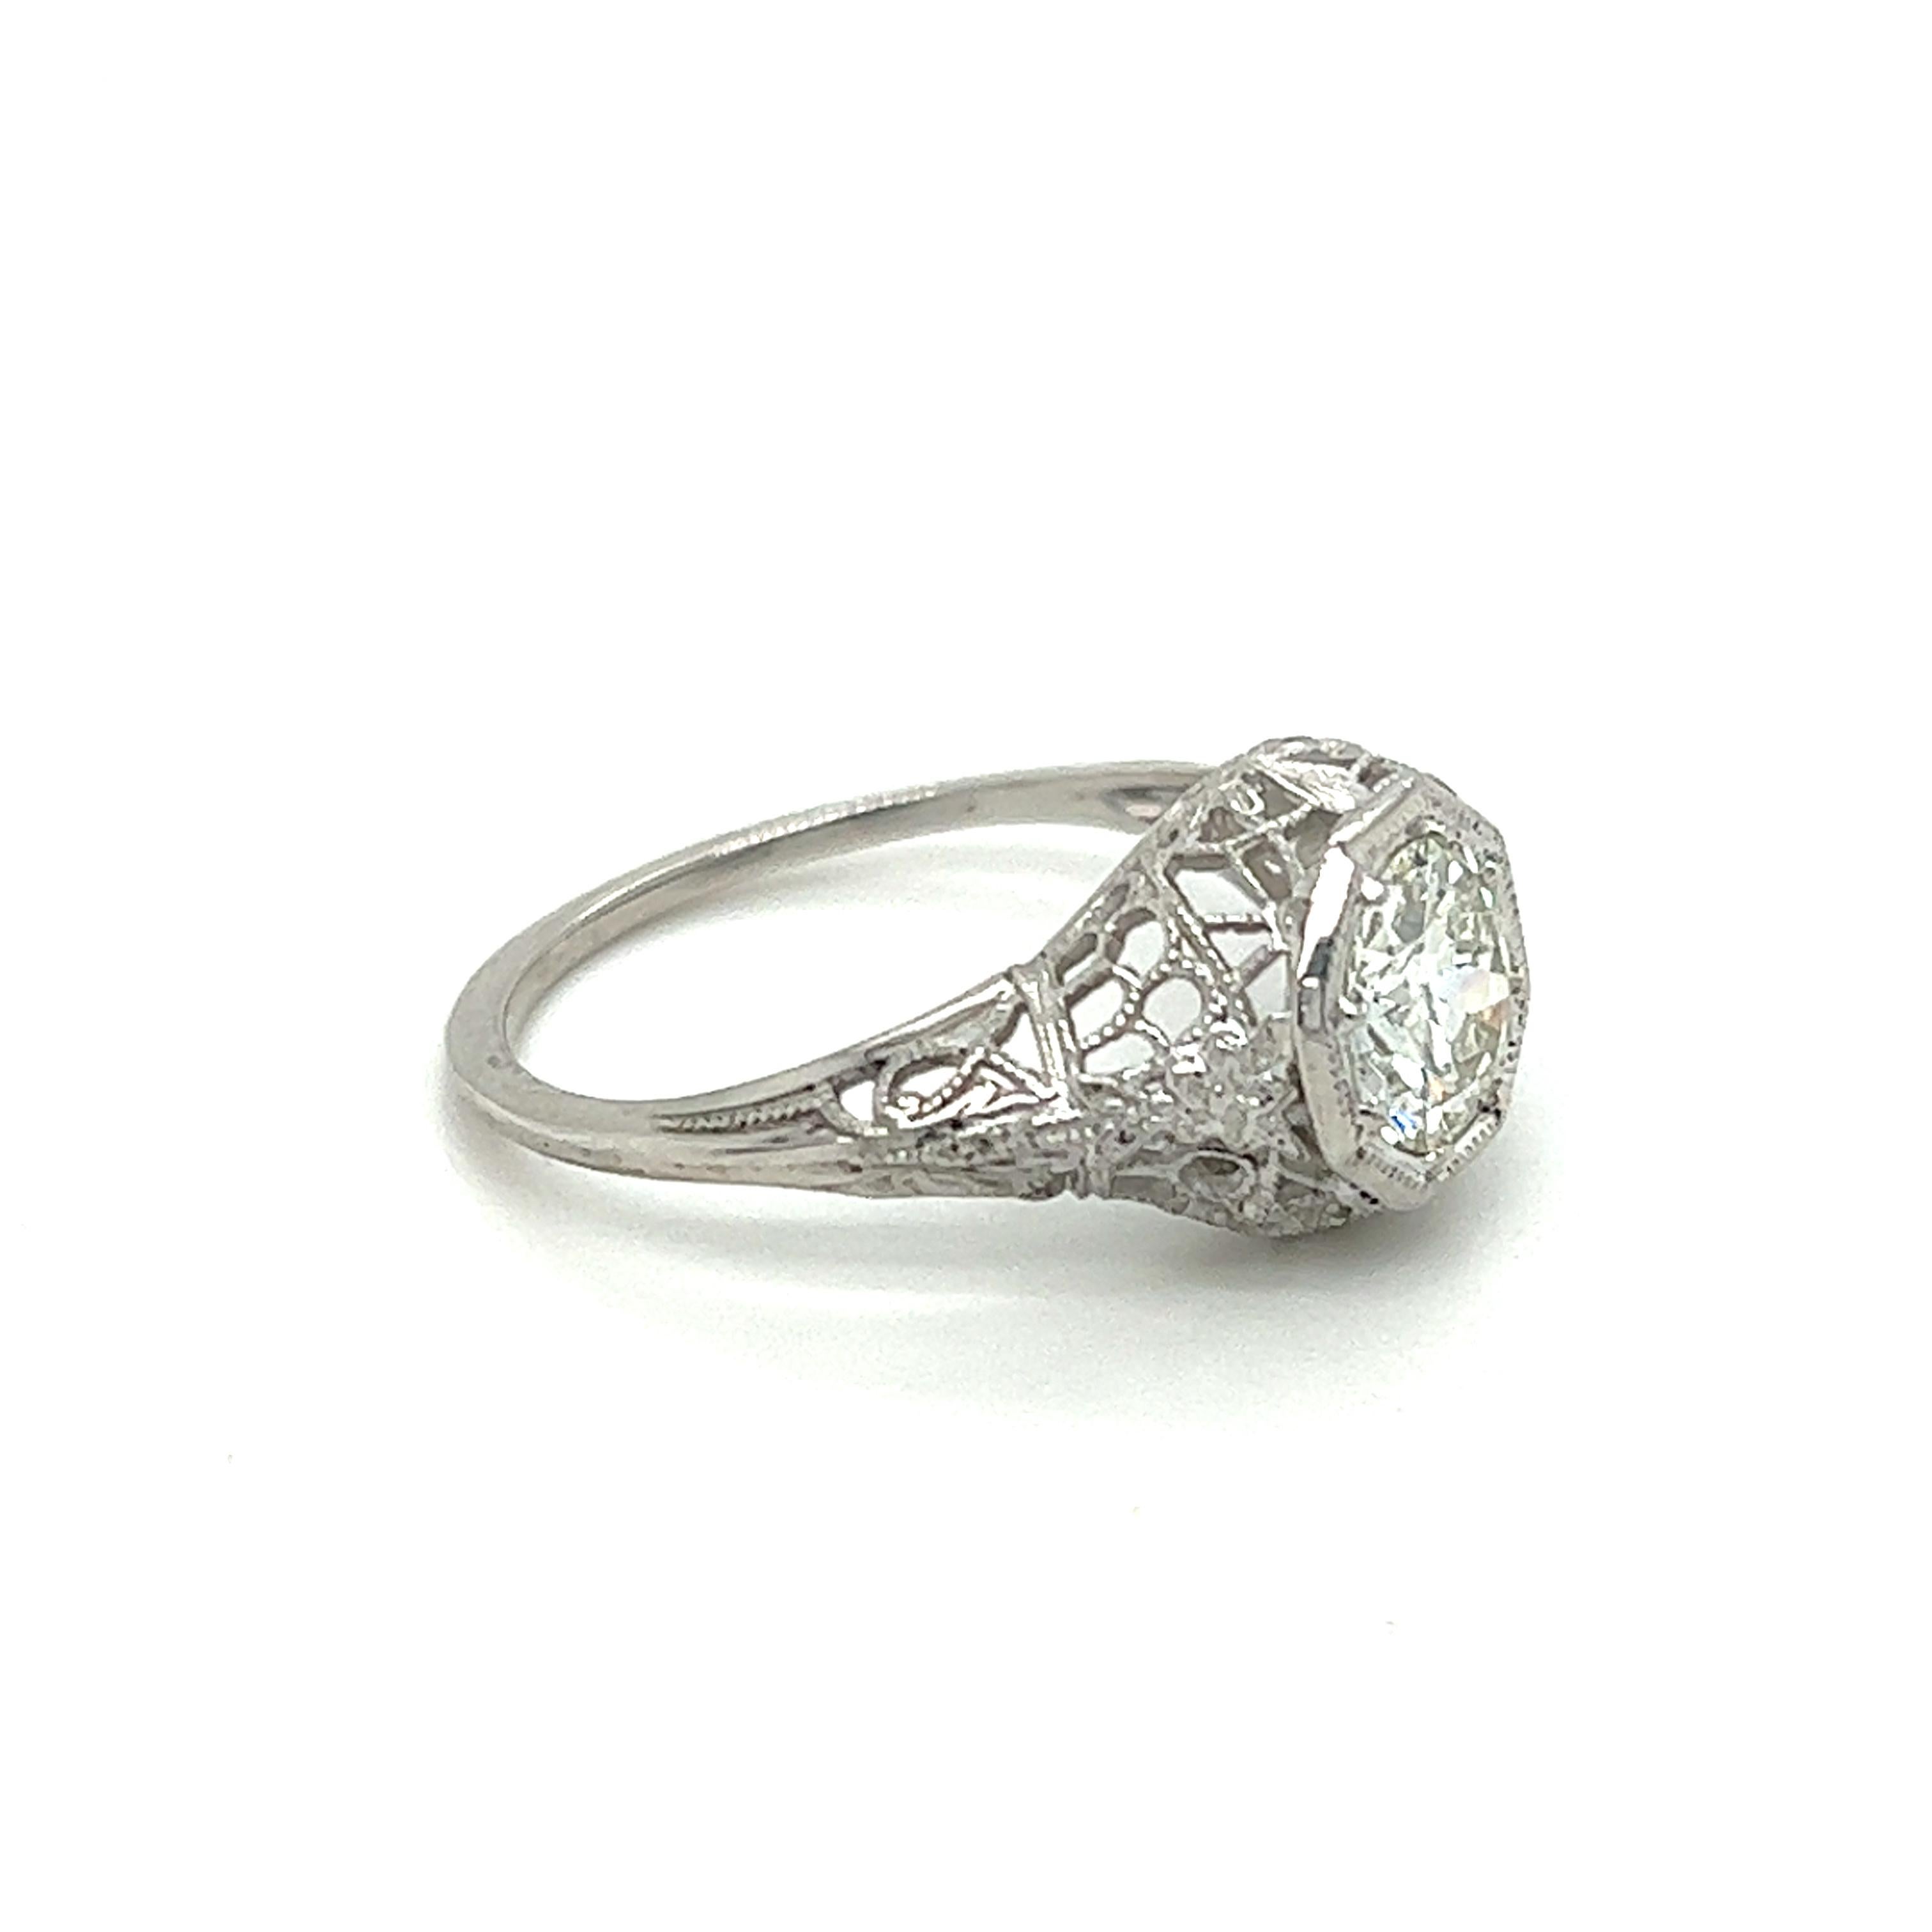 Women's Art Deco 0.93ct Old European Cut Diamond Filigree Engagement Ring in 18k Gold 